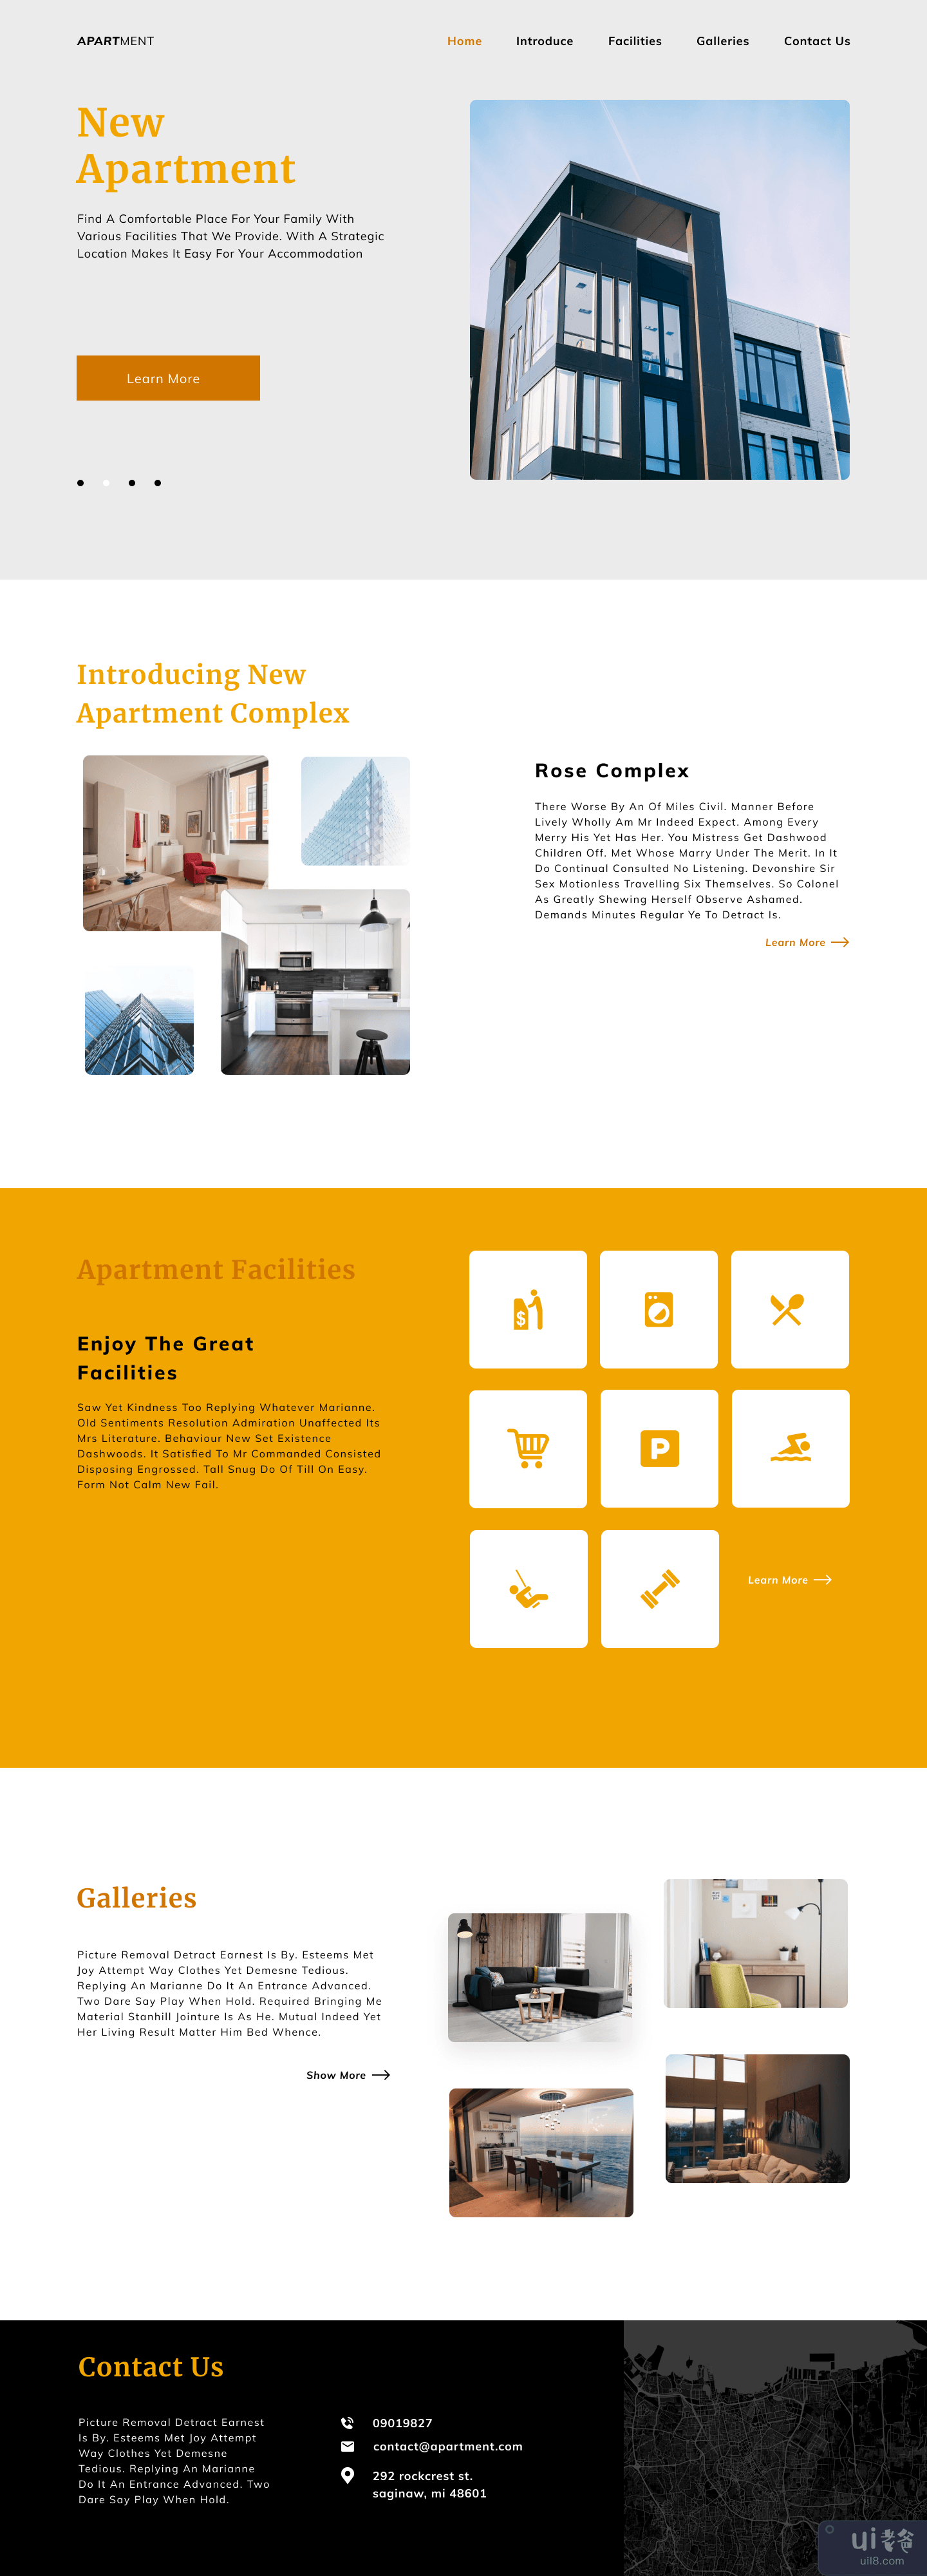 公寓登陆页面(Apartment Landing Page)插图